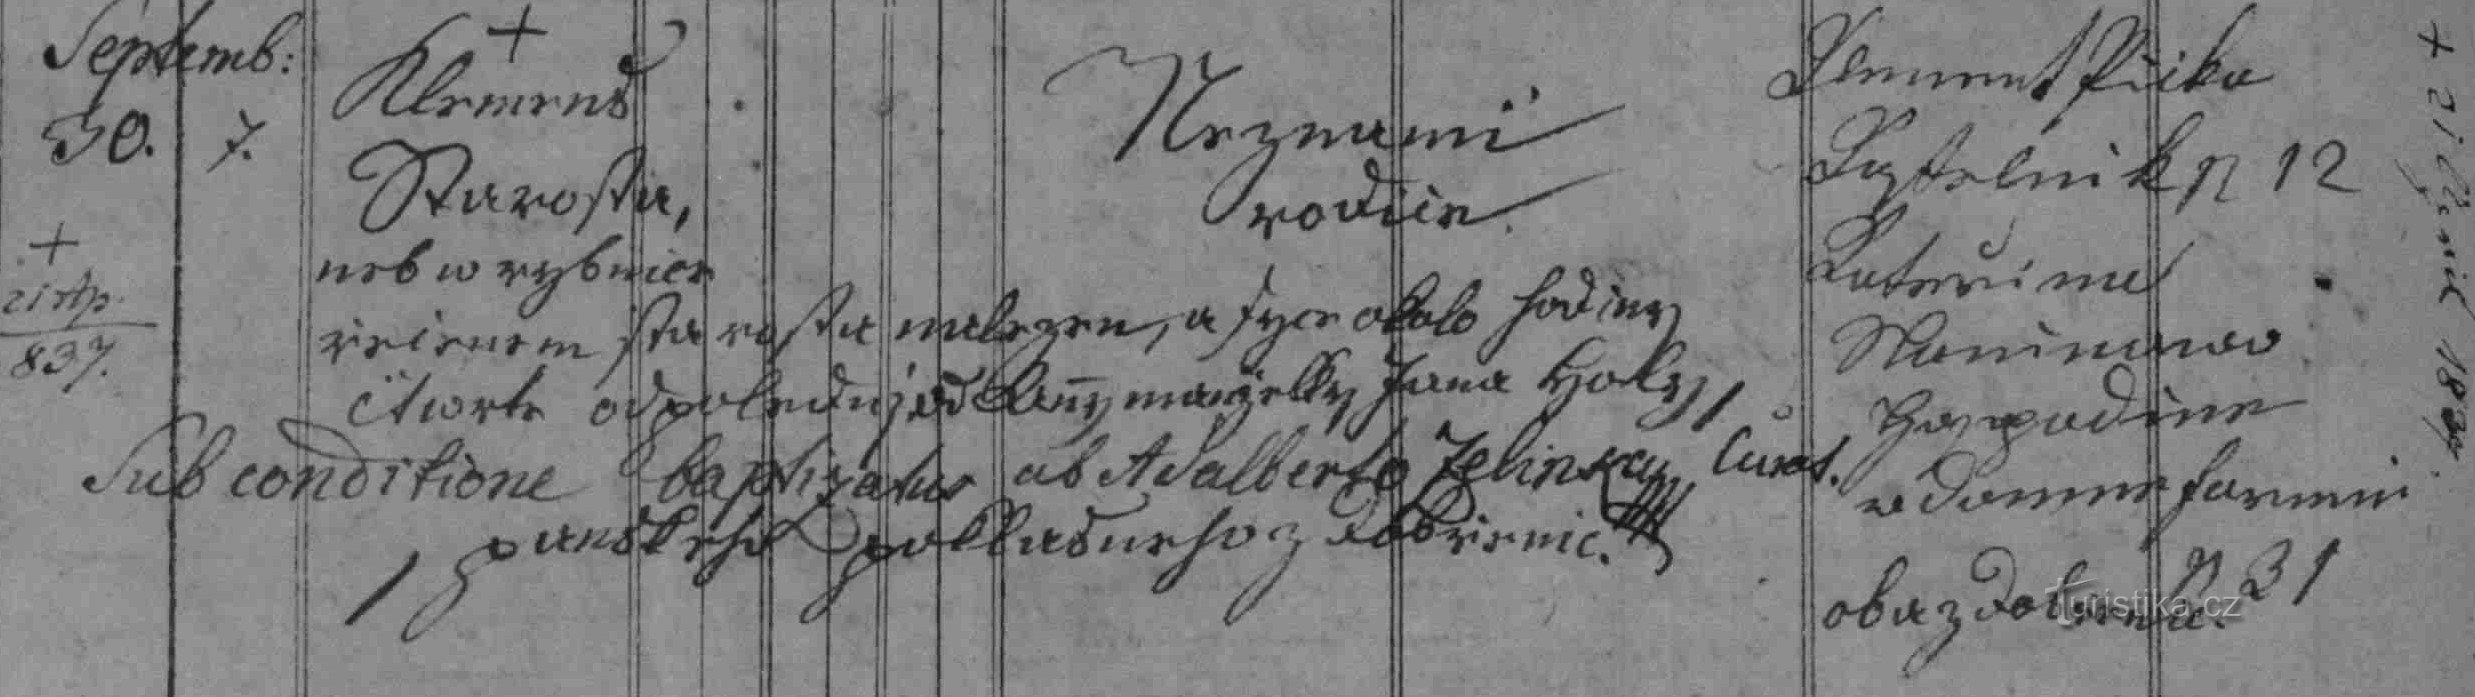 Dobření 1836 年 Klemens Starosta 洗礼的登记记录